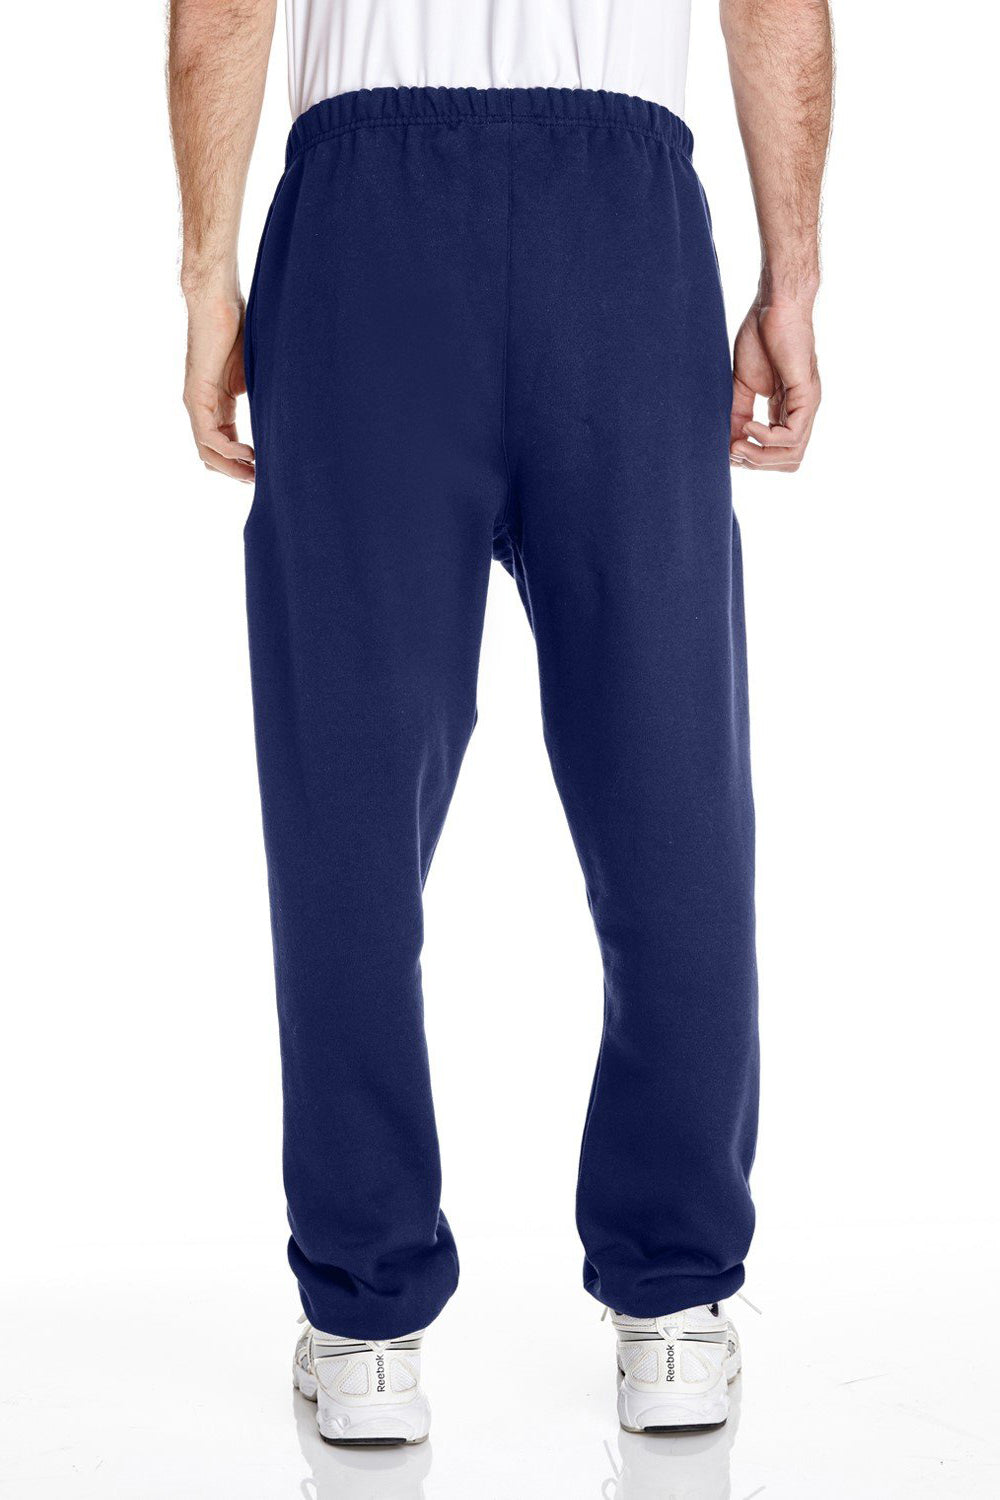 Champion RW10 Mens Reverse Weave Fleece Sweatpants w/ Pockets Navy Blue Back